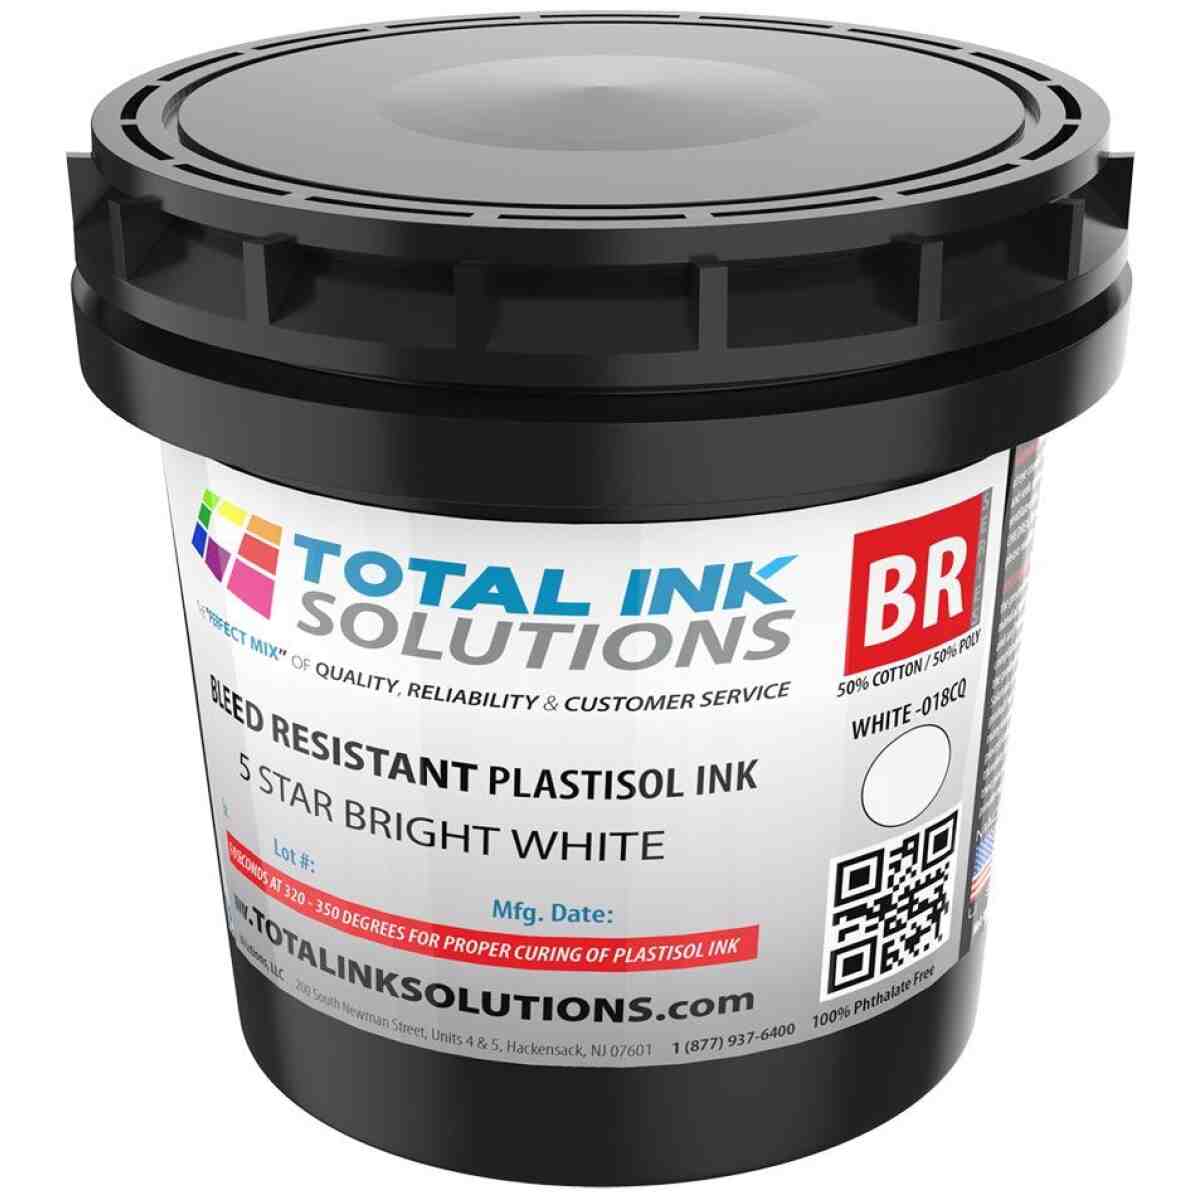 Bleed Resistant Plastisol Ink - 5 Star Bright White - Quart TOTAL INK SOLUTIONS®